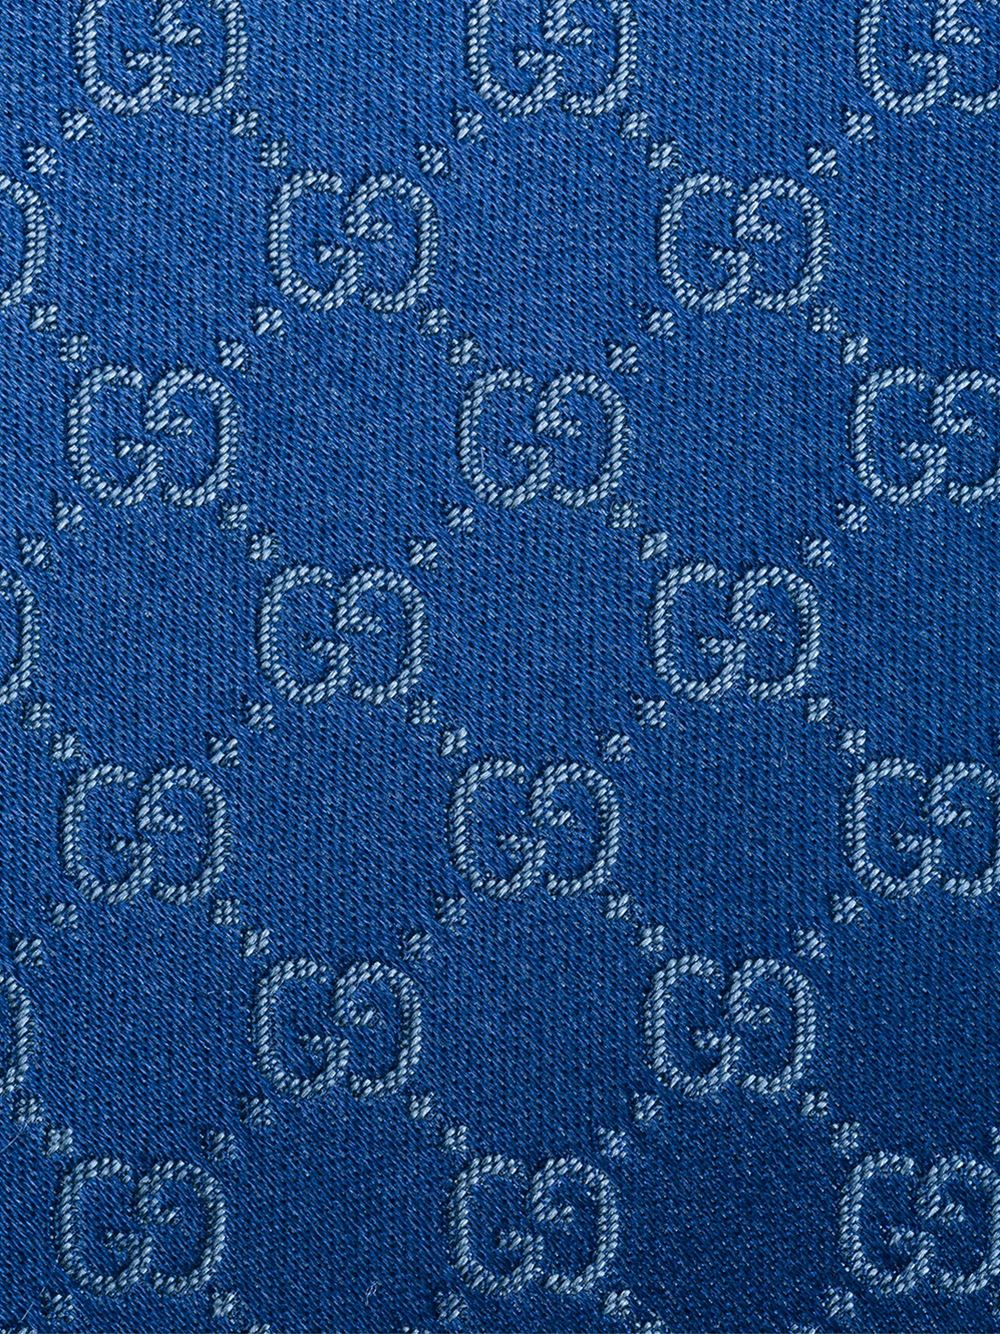 Gucci Gg Pattern Tie in Blue for Men - Lyst